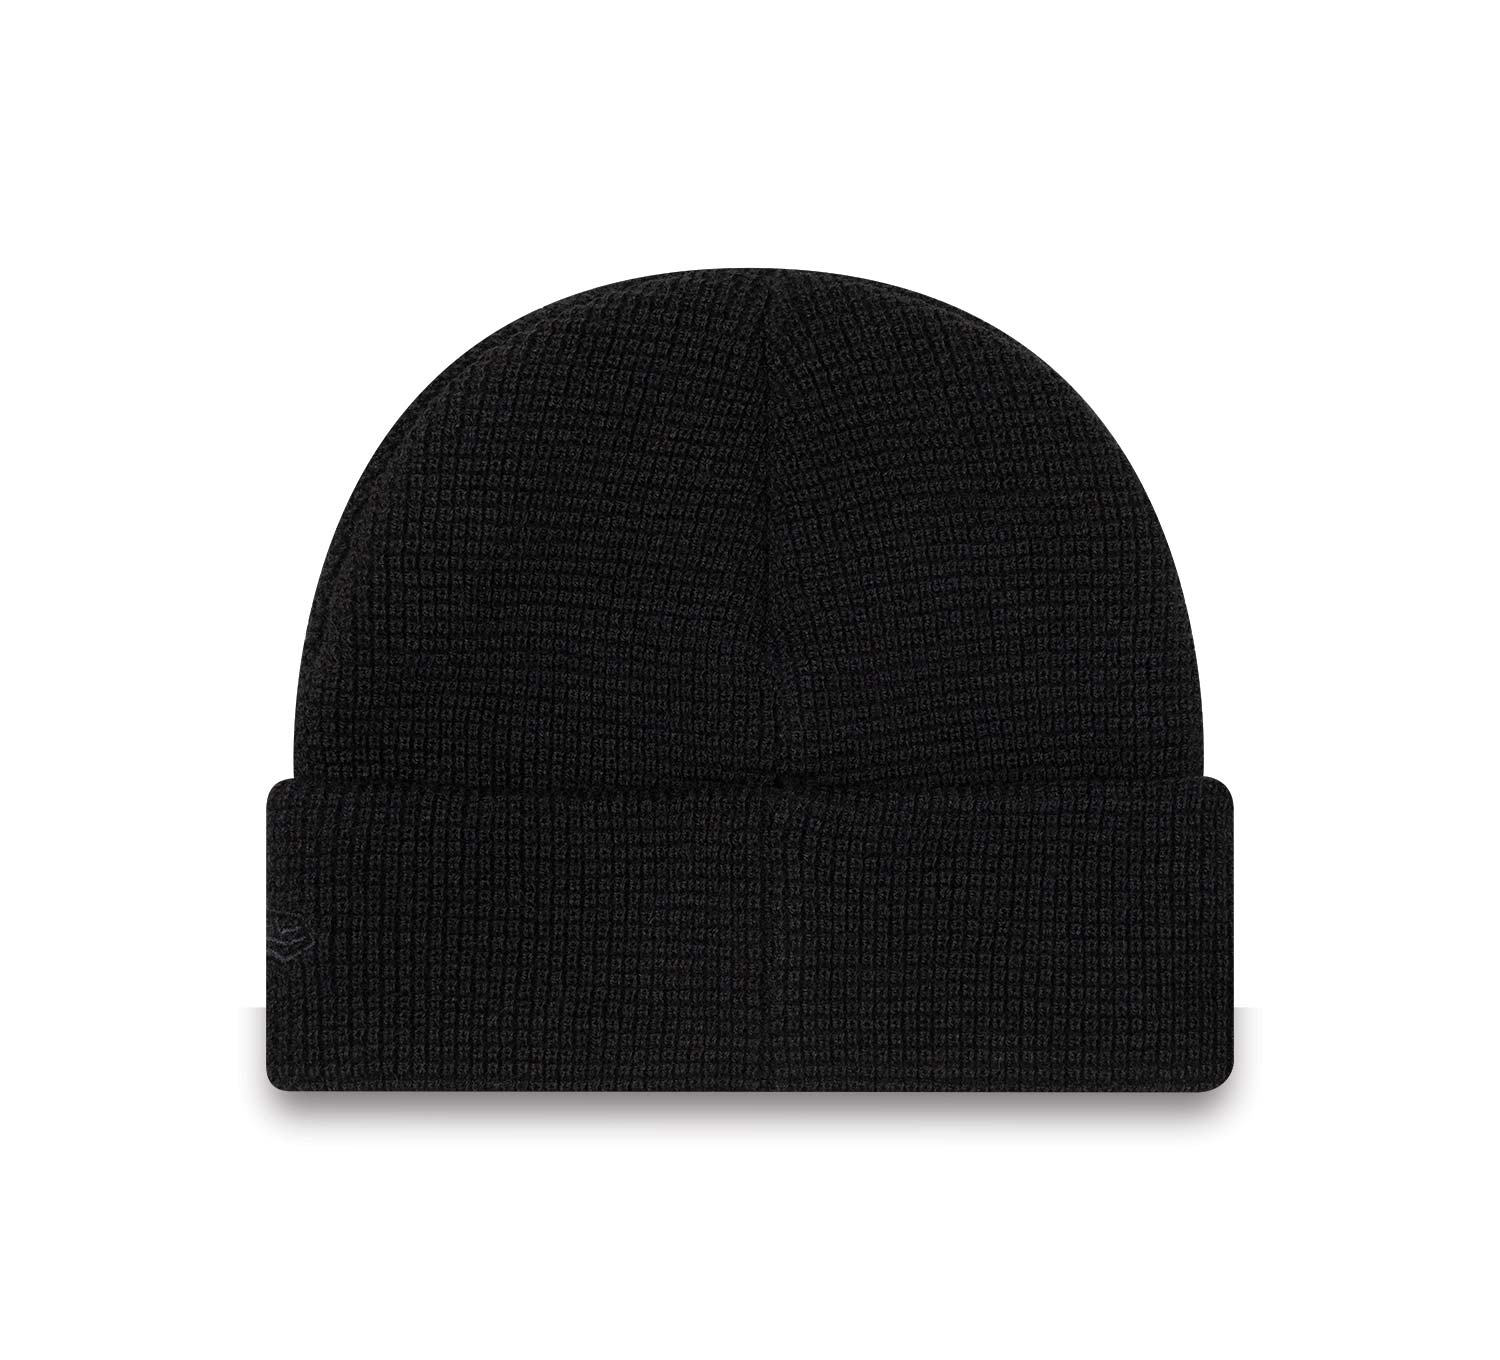 New Era Patch Short Cuff Black Beanie Hat